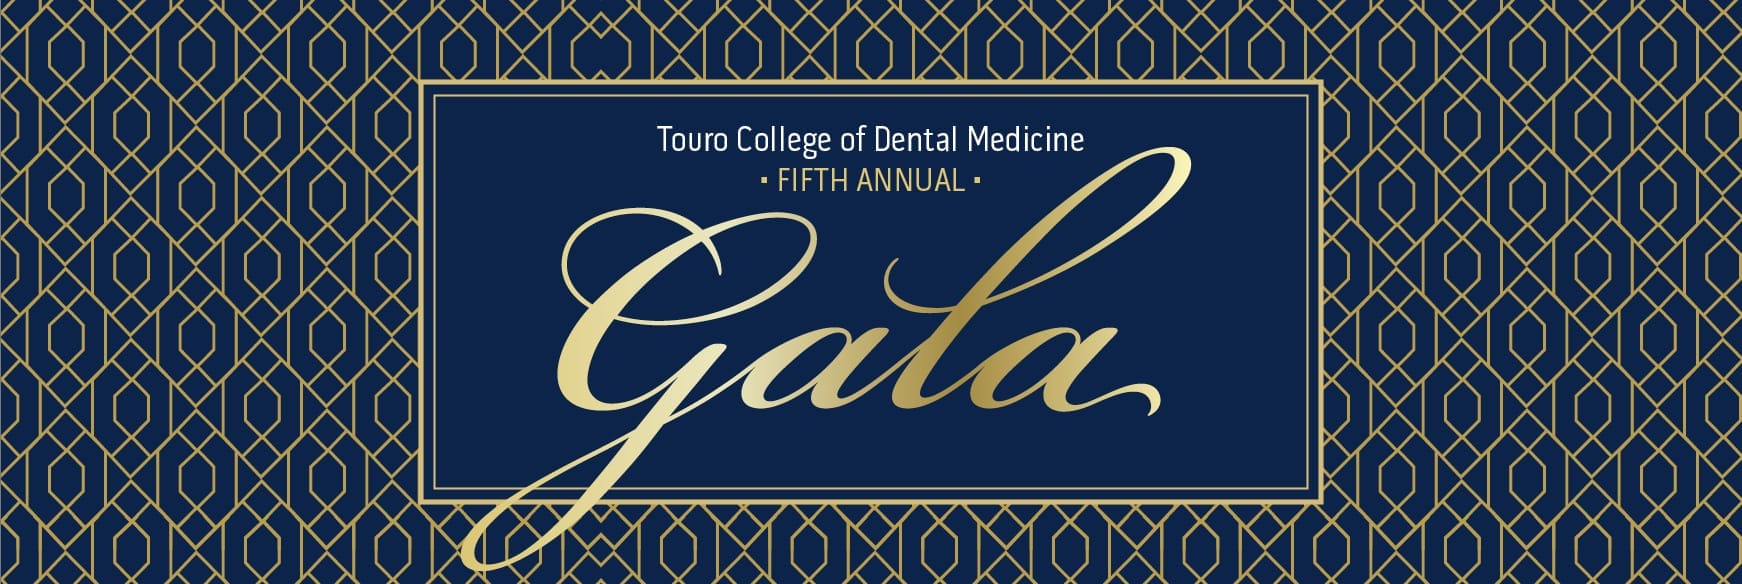 Touro College of Dental Medicine 5th annual gala